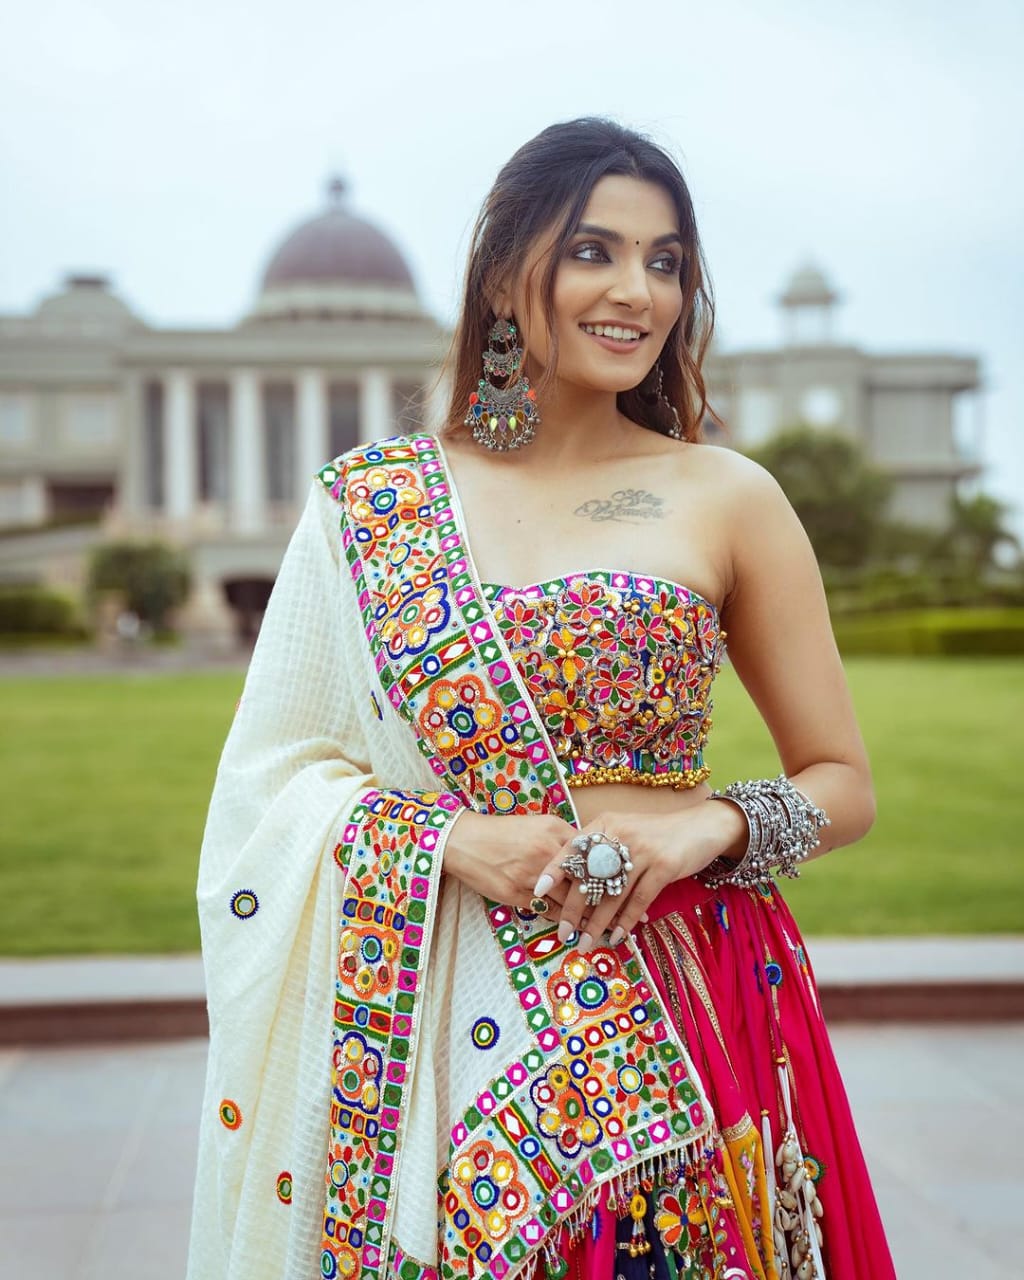 Image may contain: 1 person, standing | Navratri dress, Bollywood lehenga,  Garba dress